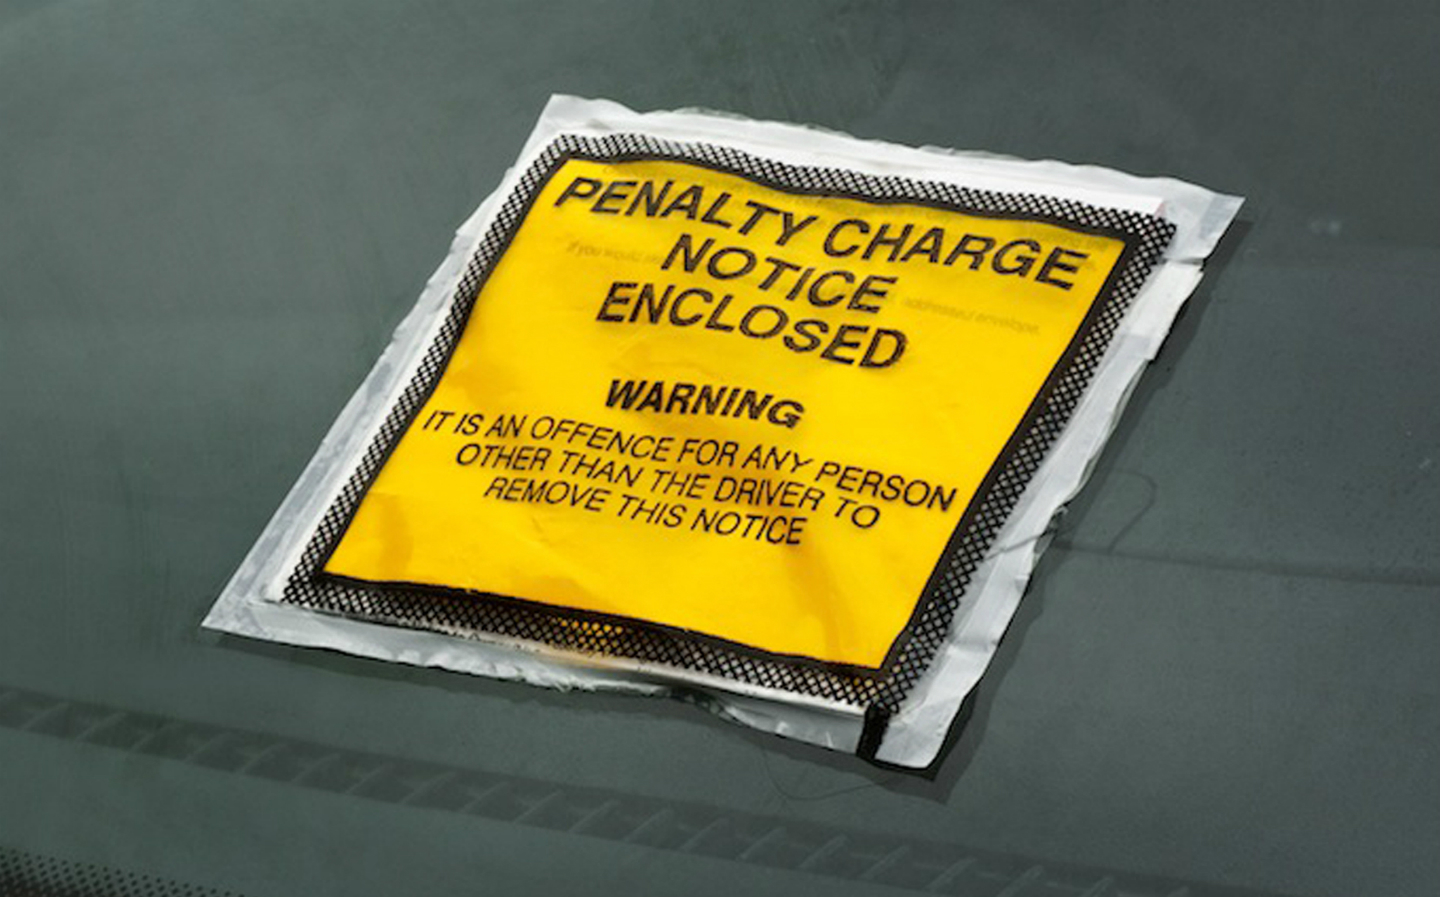 New regulations put an end to rogue parking fines